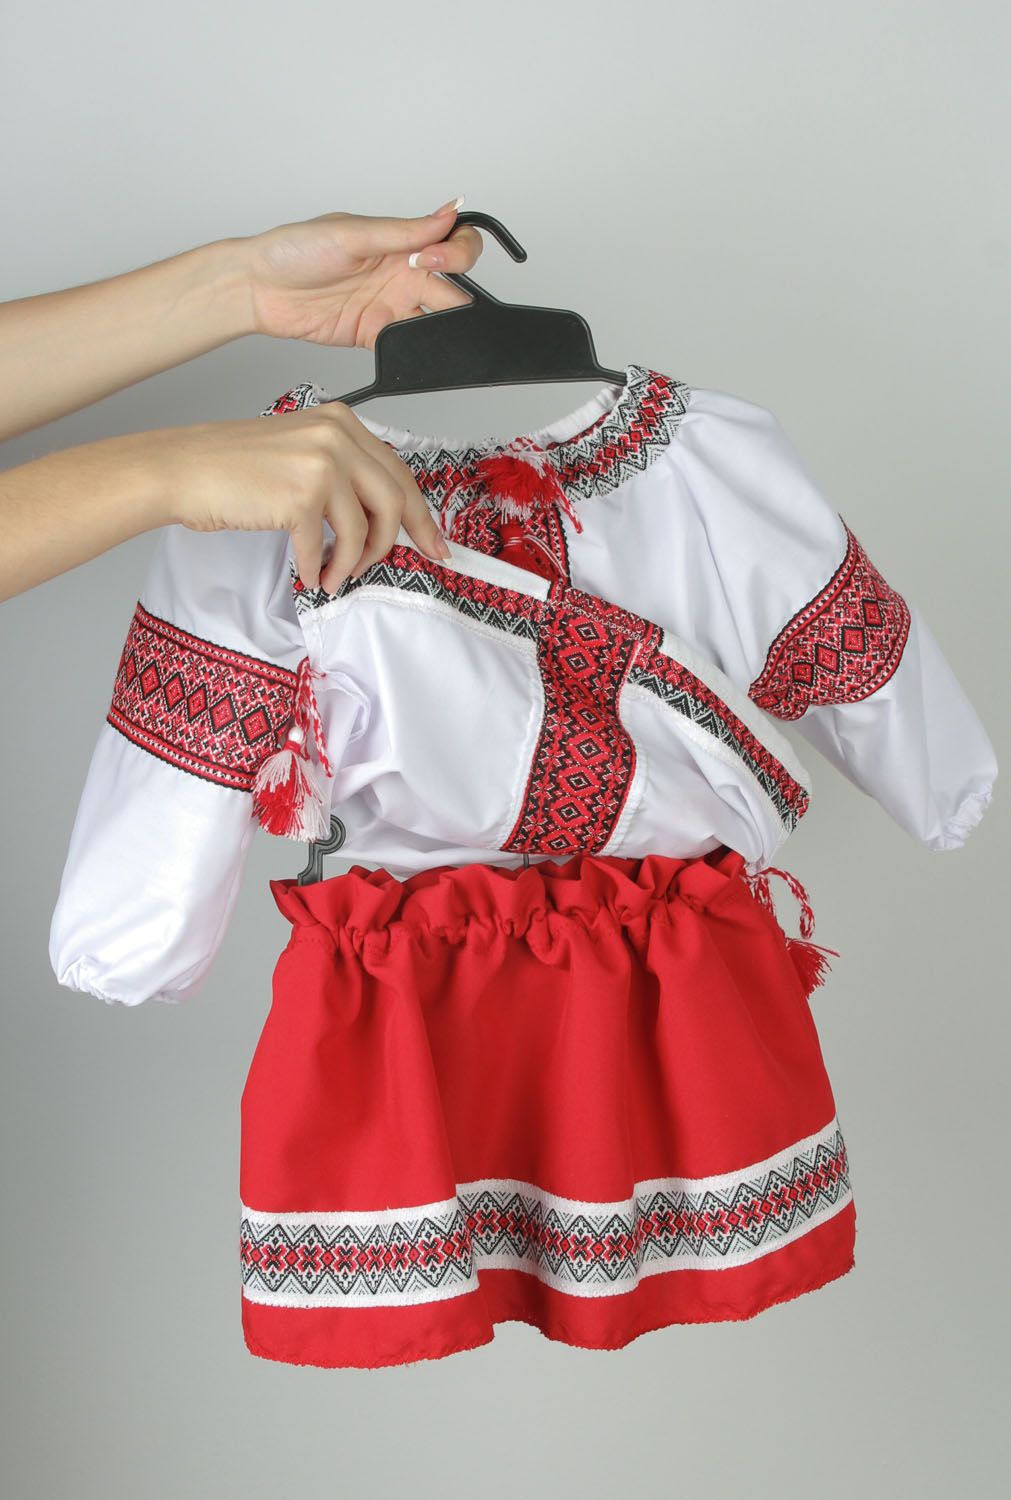 Costume national ukrainien fait main photo 4